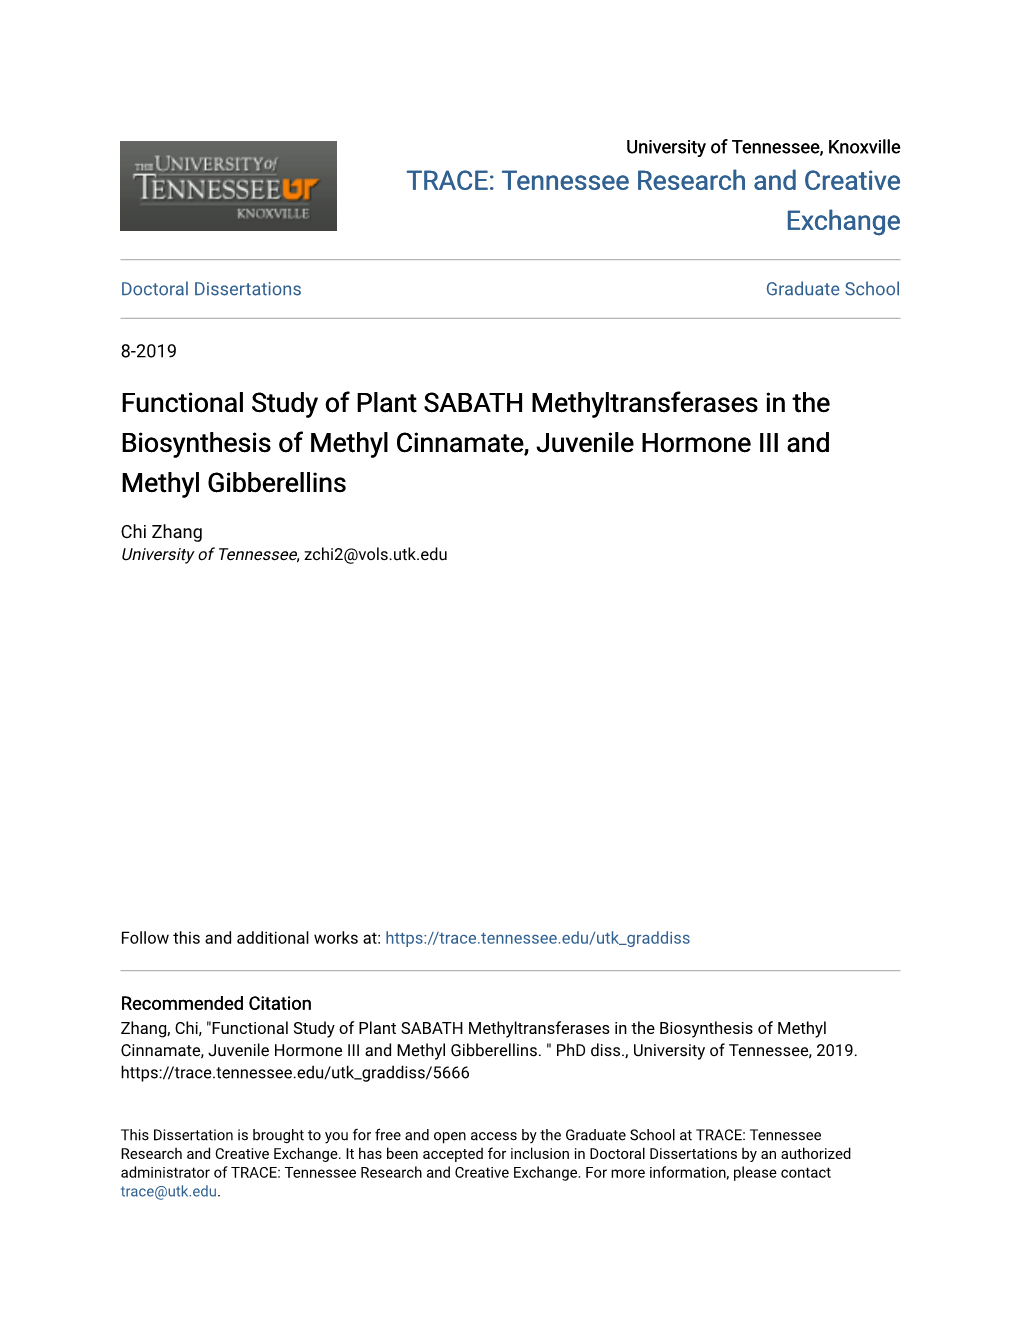 Functional Study of Plant SABATH Methyltransferases in the Biosynthesis of Methyl Cinnamate, Juvenile Hormone III and Methyl Gibberellins